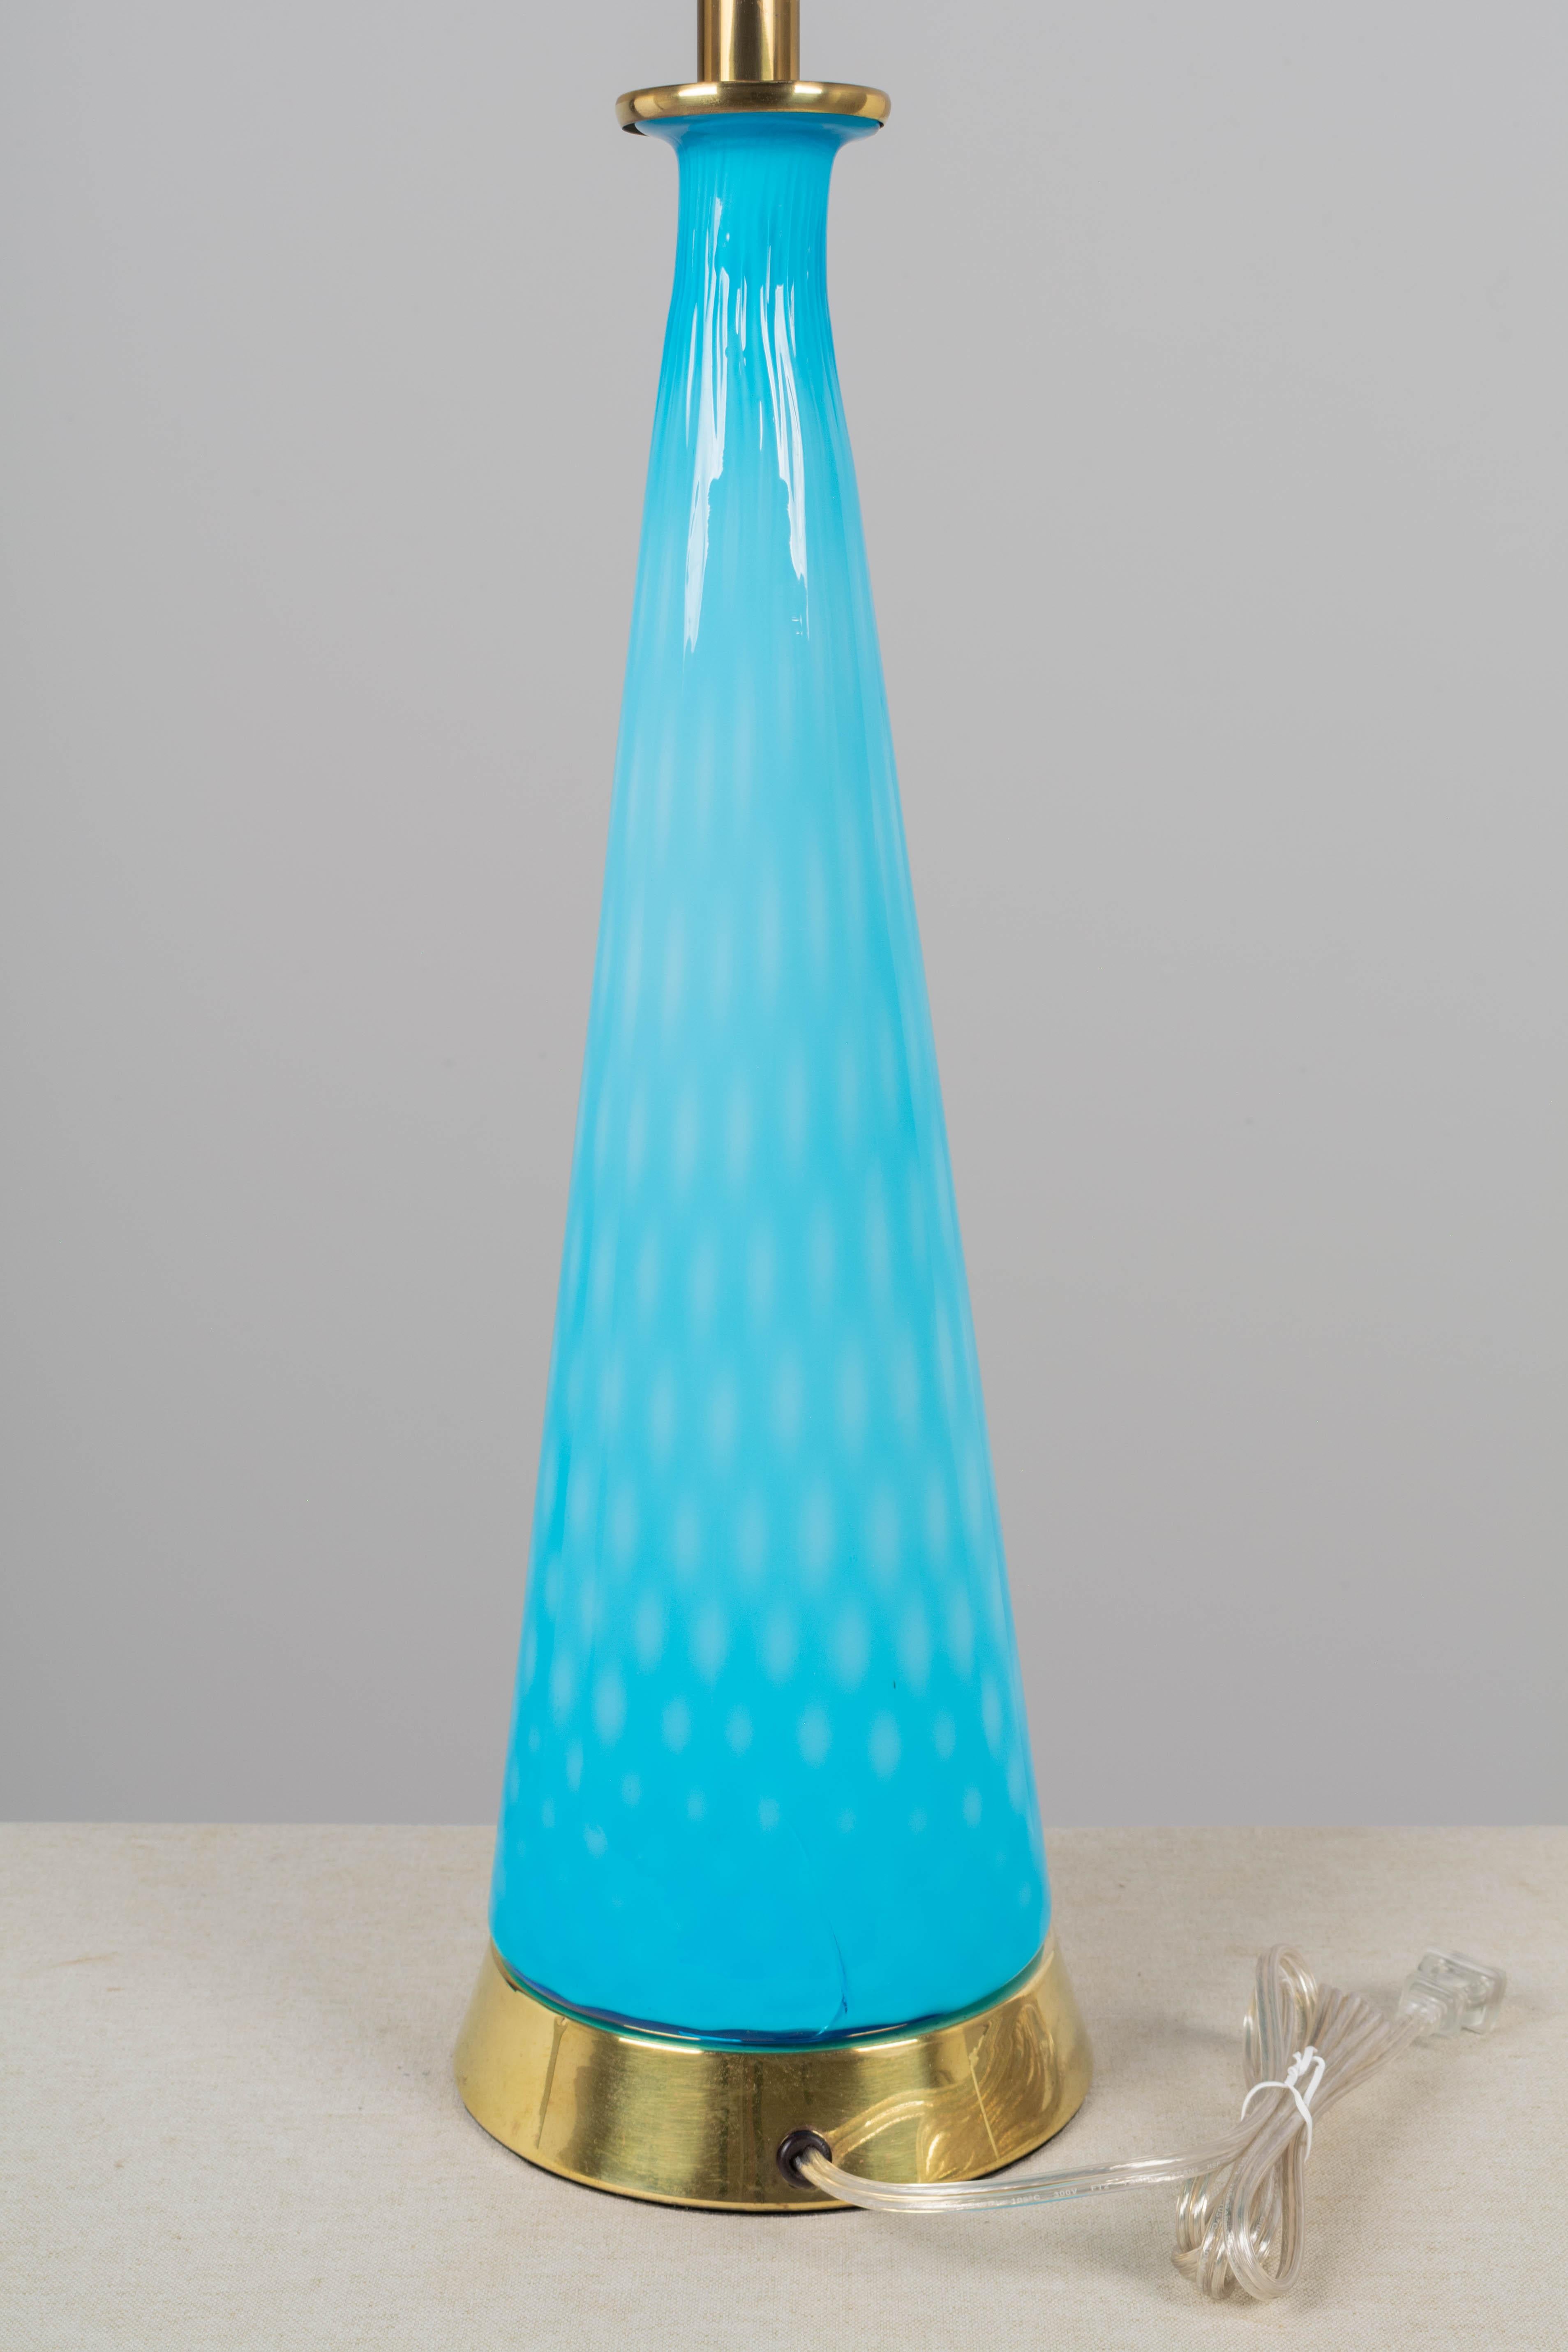 20th Century Mid-Century Modern Murano Glass Lamp For Sale